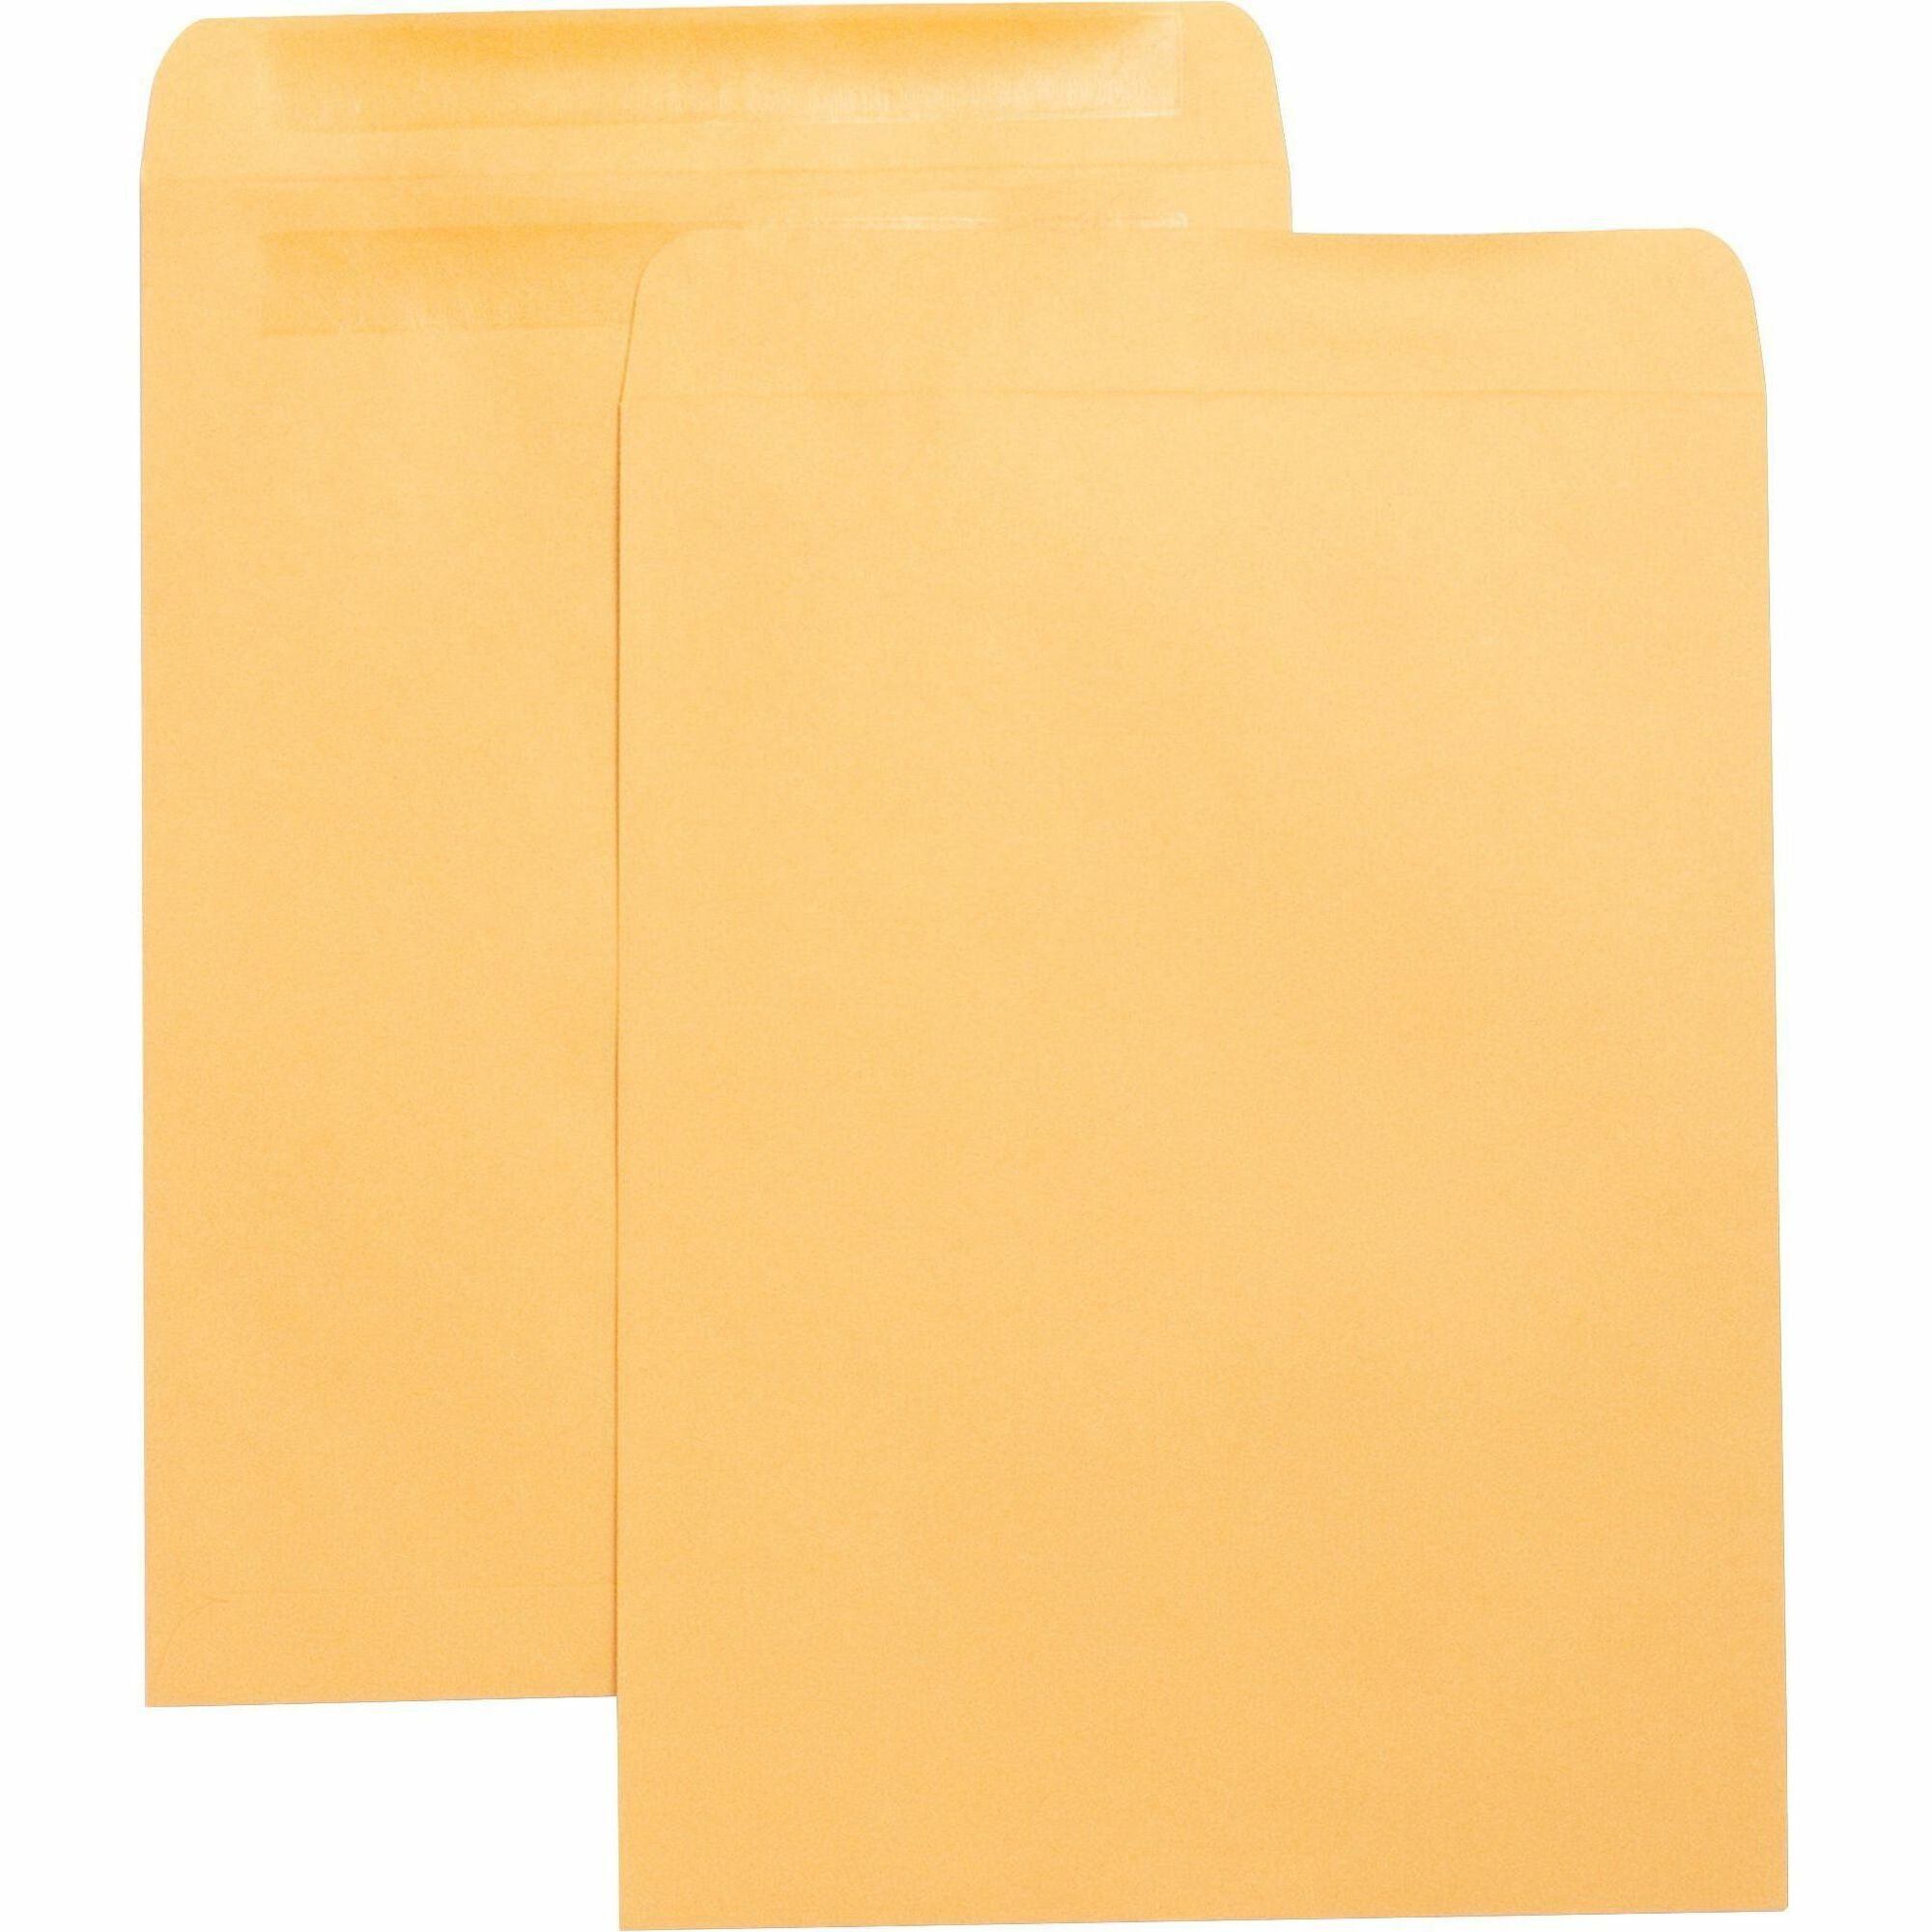 HOME :: Office Supplies :: Envelopes & Forms :: Envelopes :: Large ...